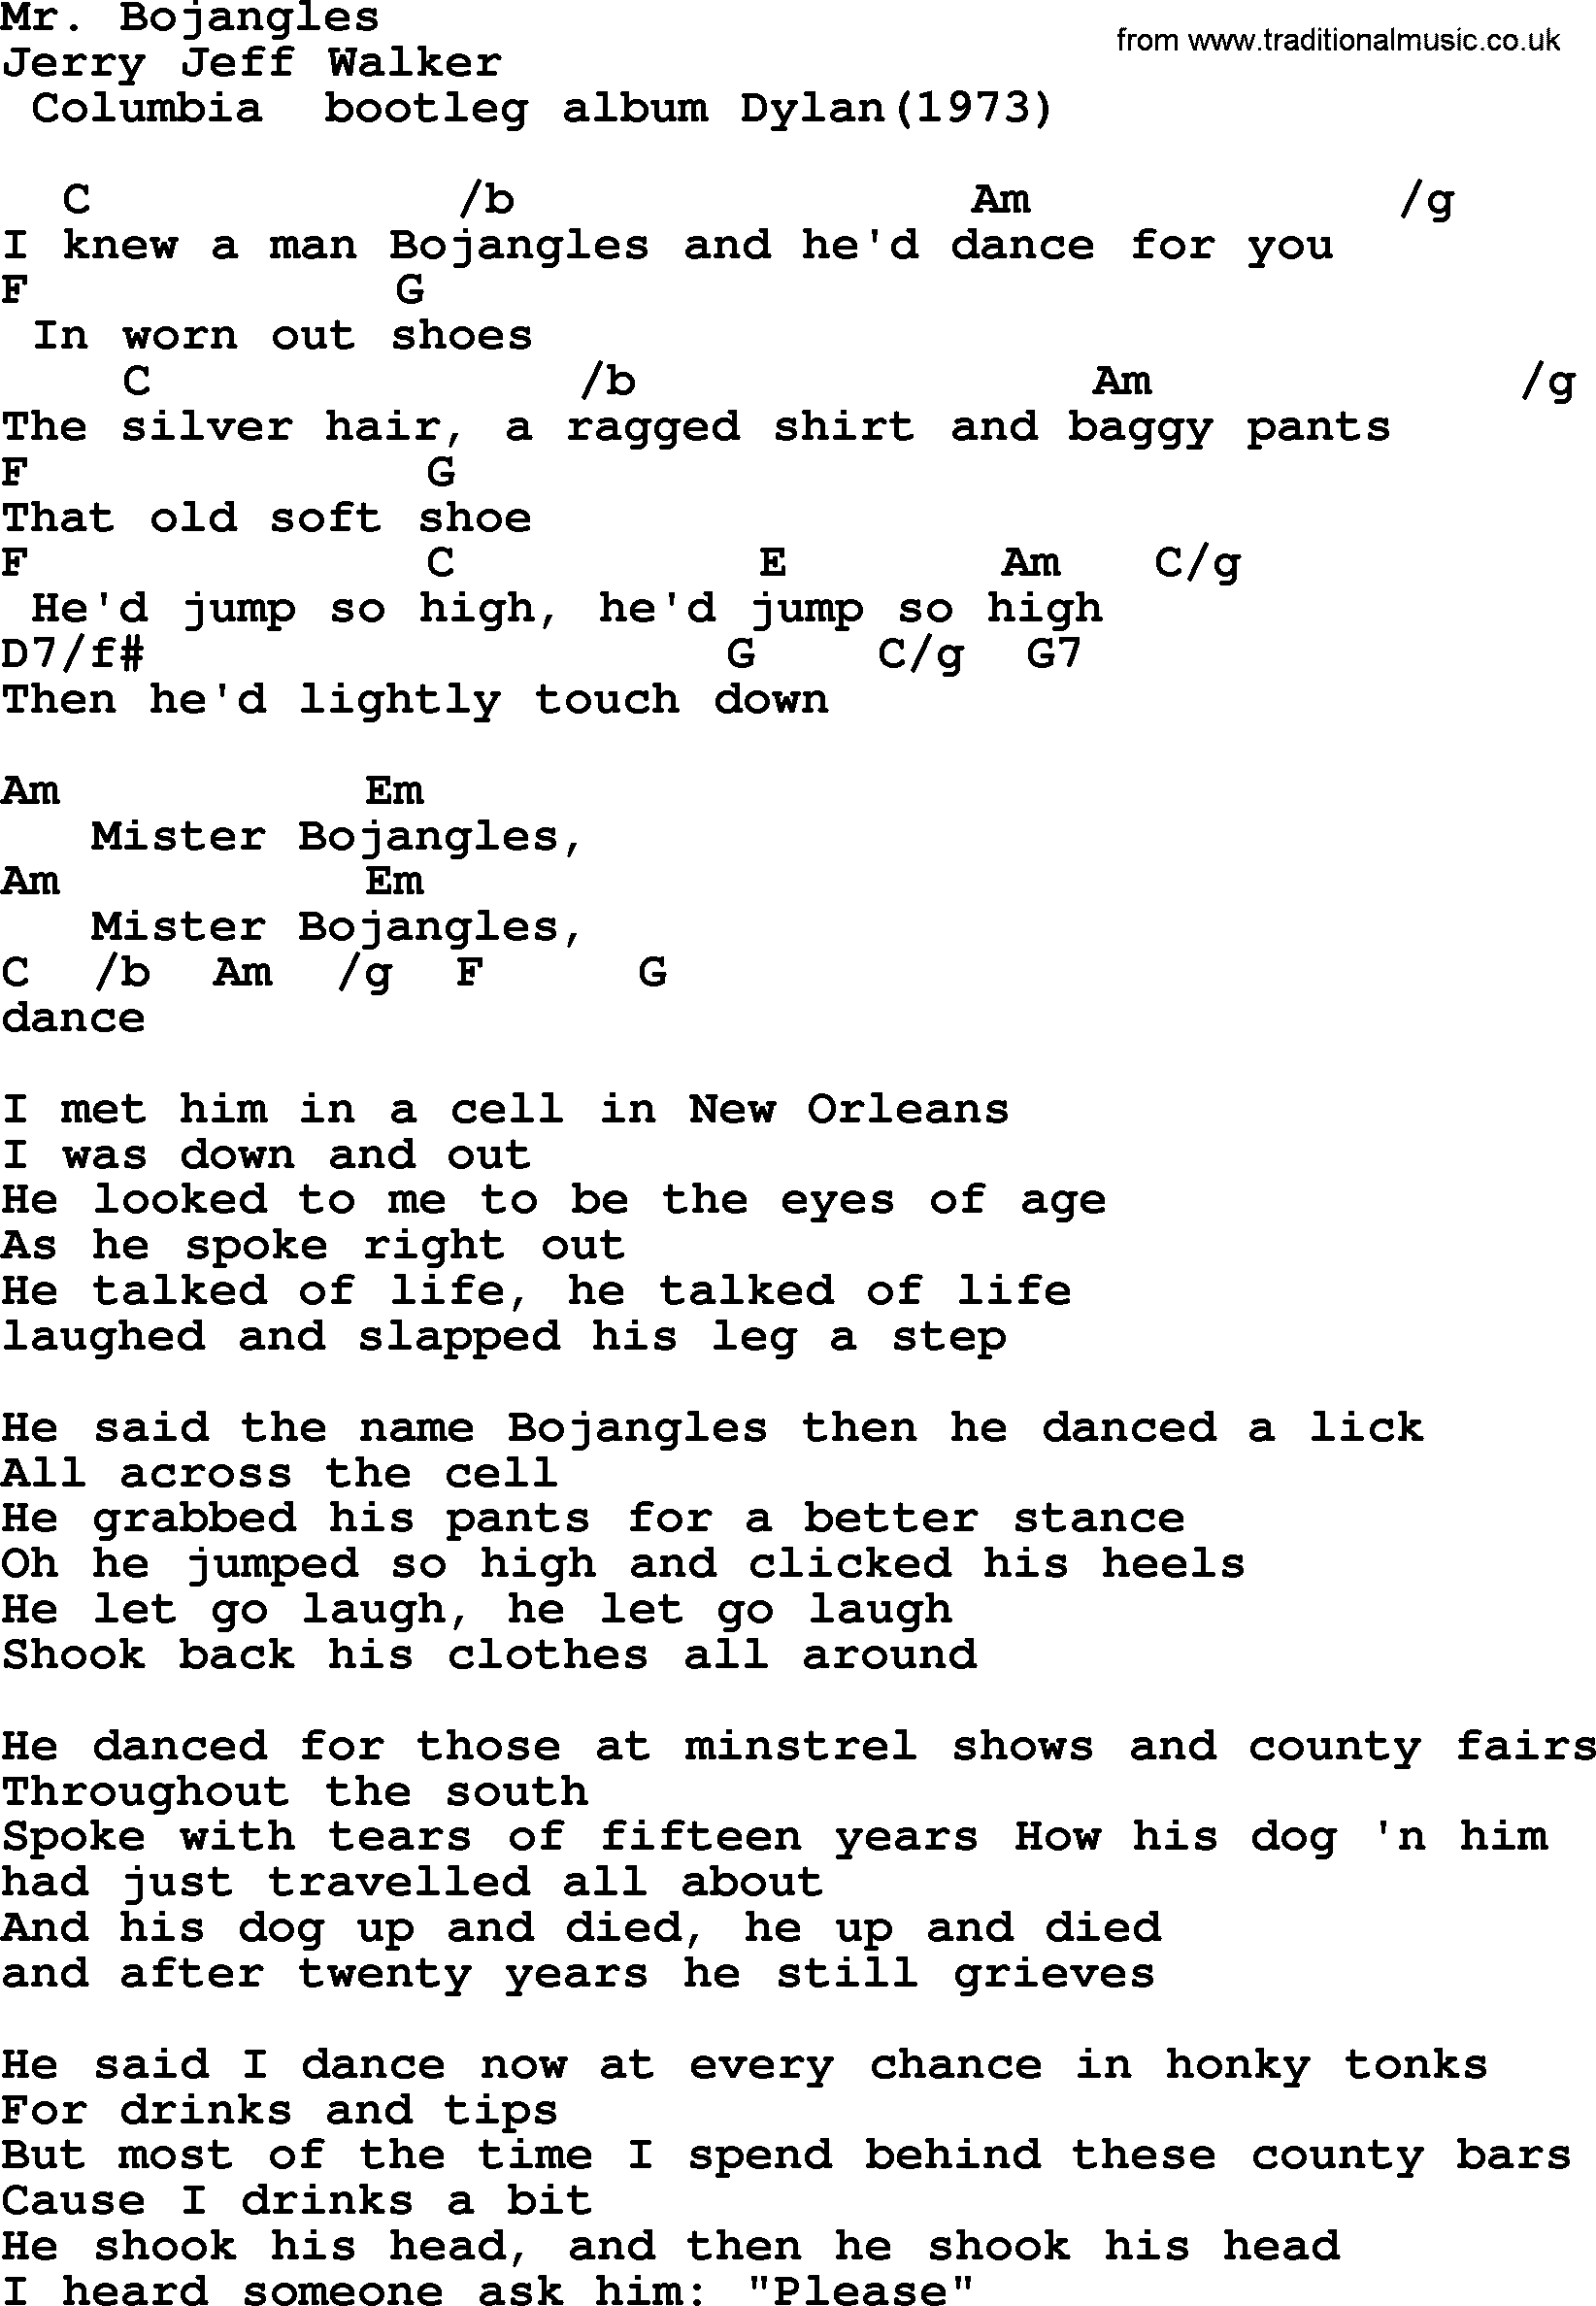 Bob Dylan song, lyrics with chords - Mr. Bojangles